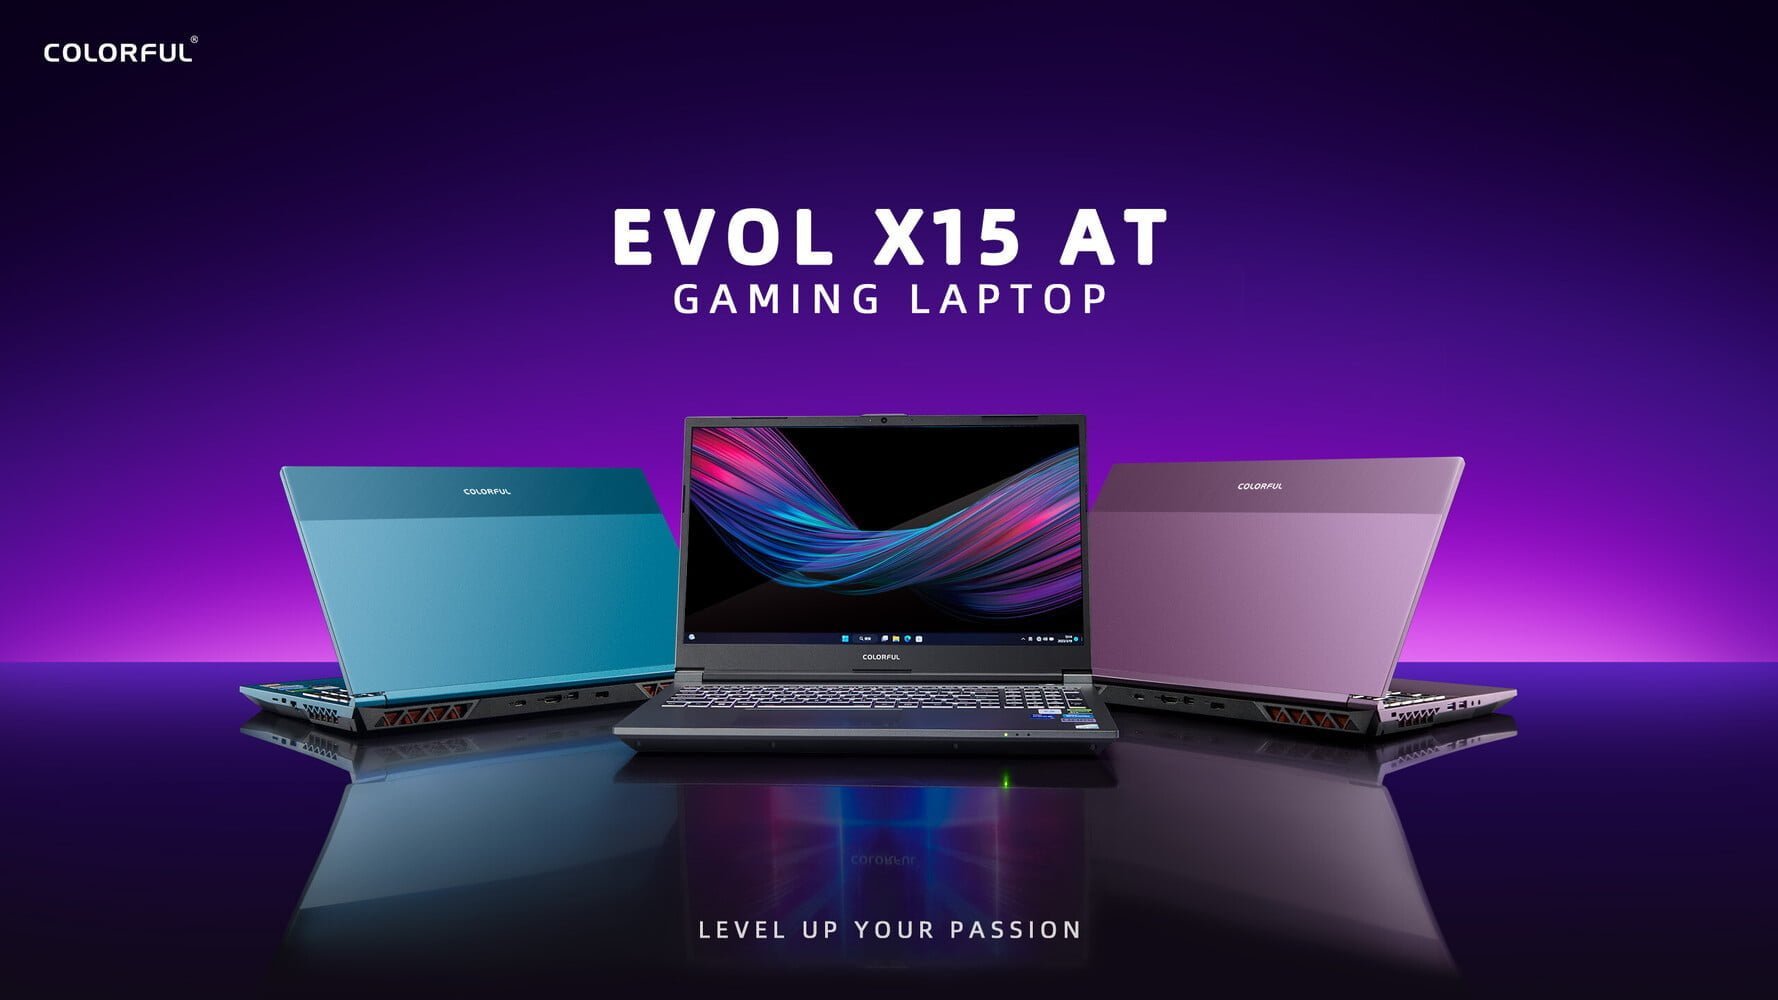 [PR] Colorful ra mắt laptop chơi game EVOL X15 AT - Image 1